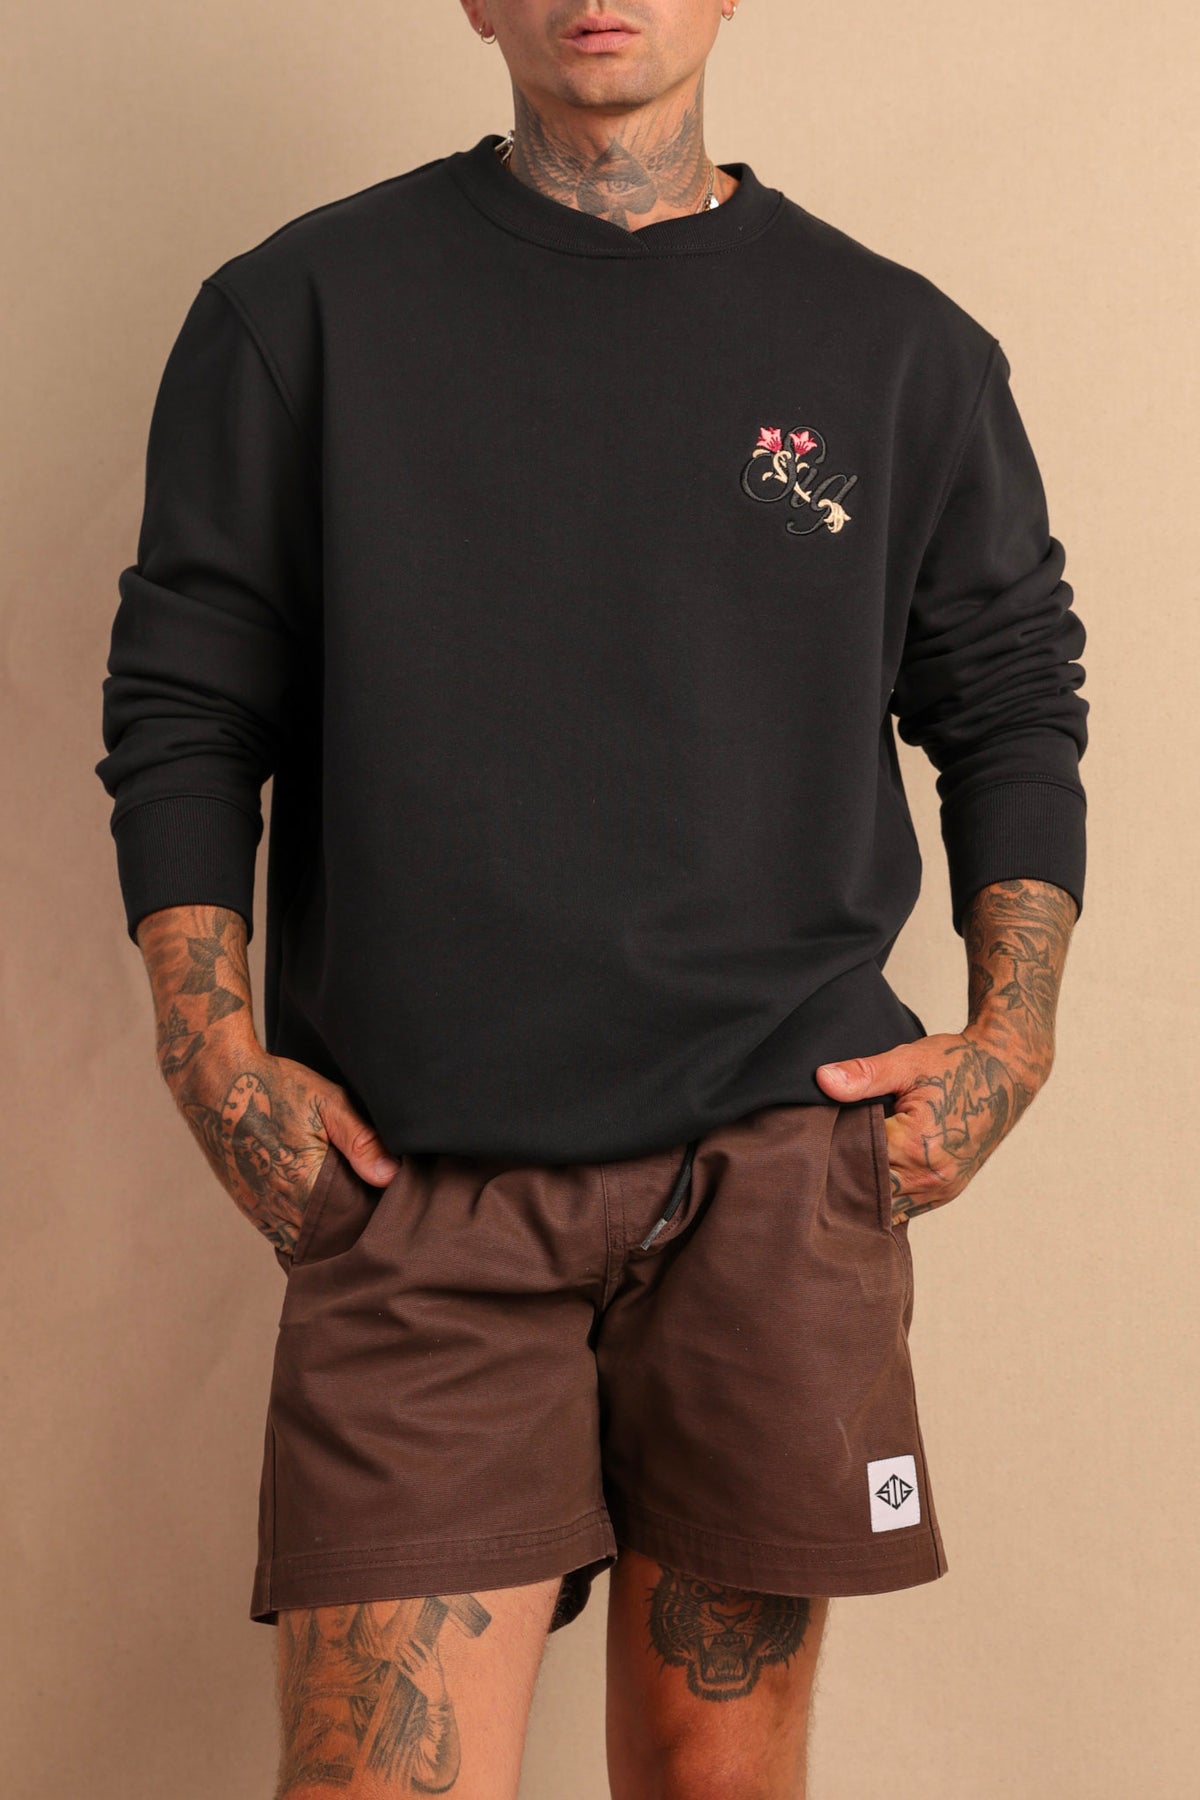 Black Crewneck Sweater